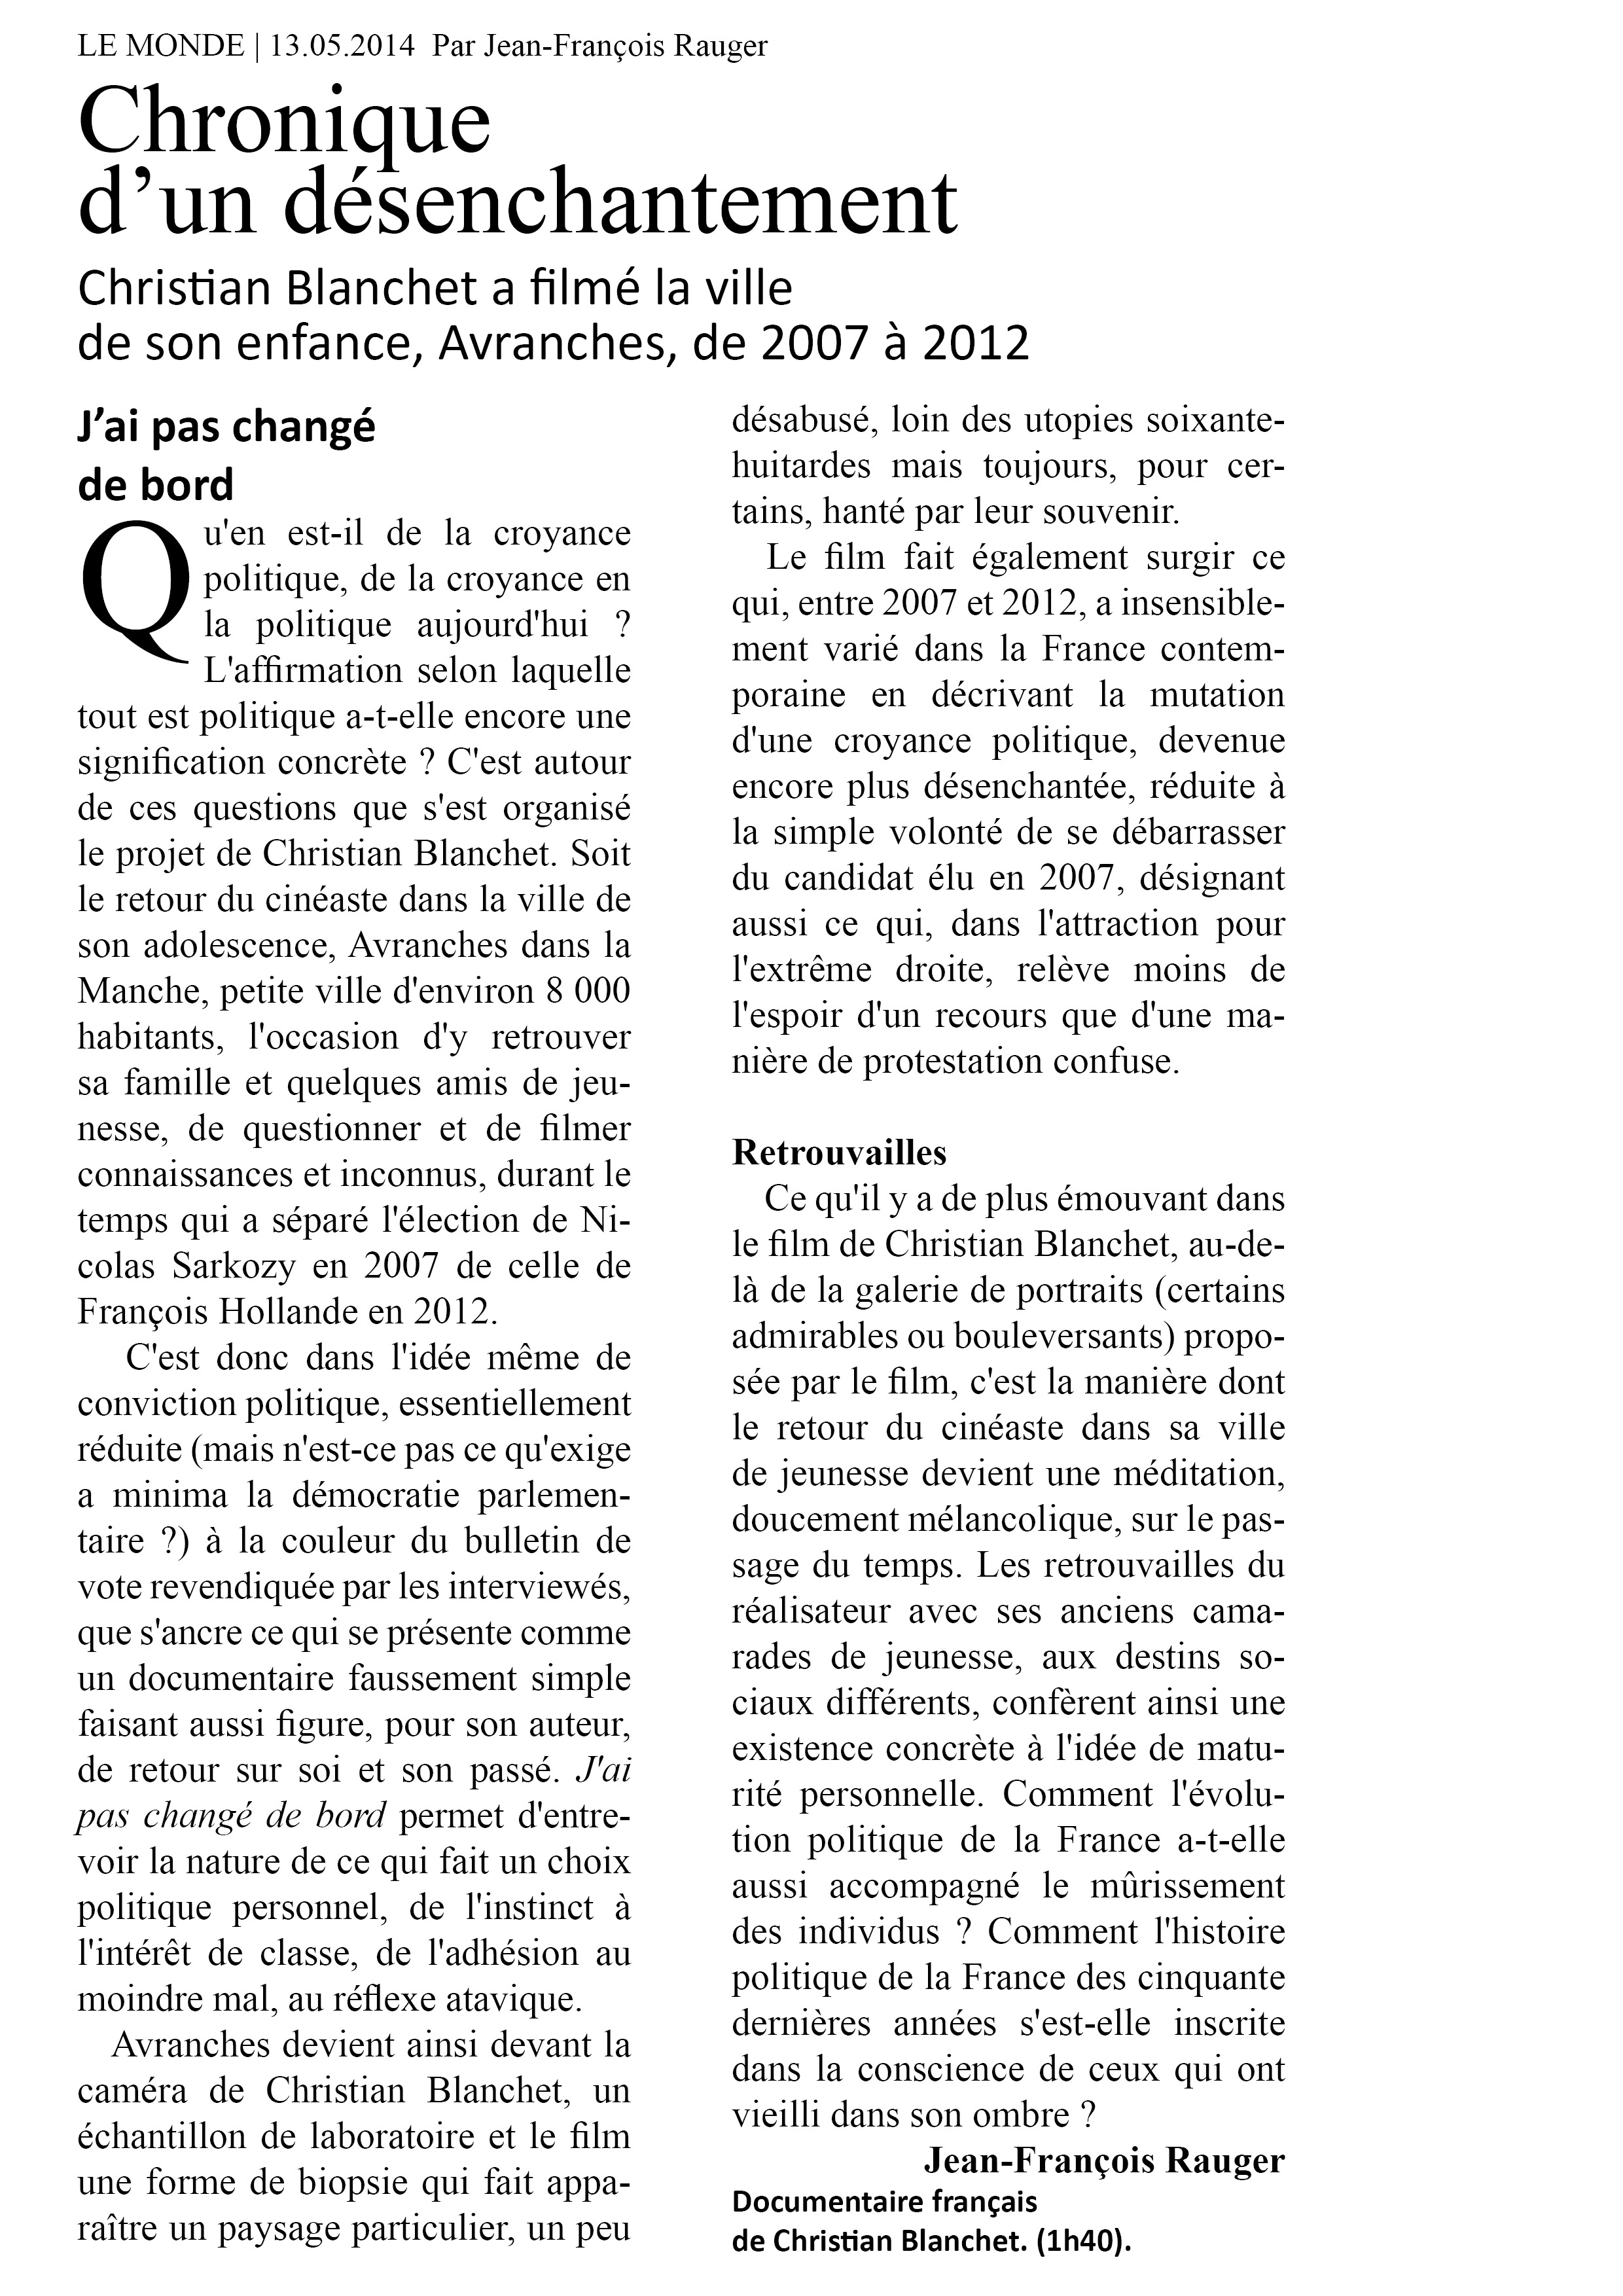 Le Monde 13 mai 2014 JF Rauger